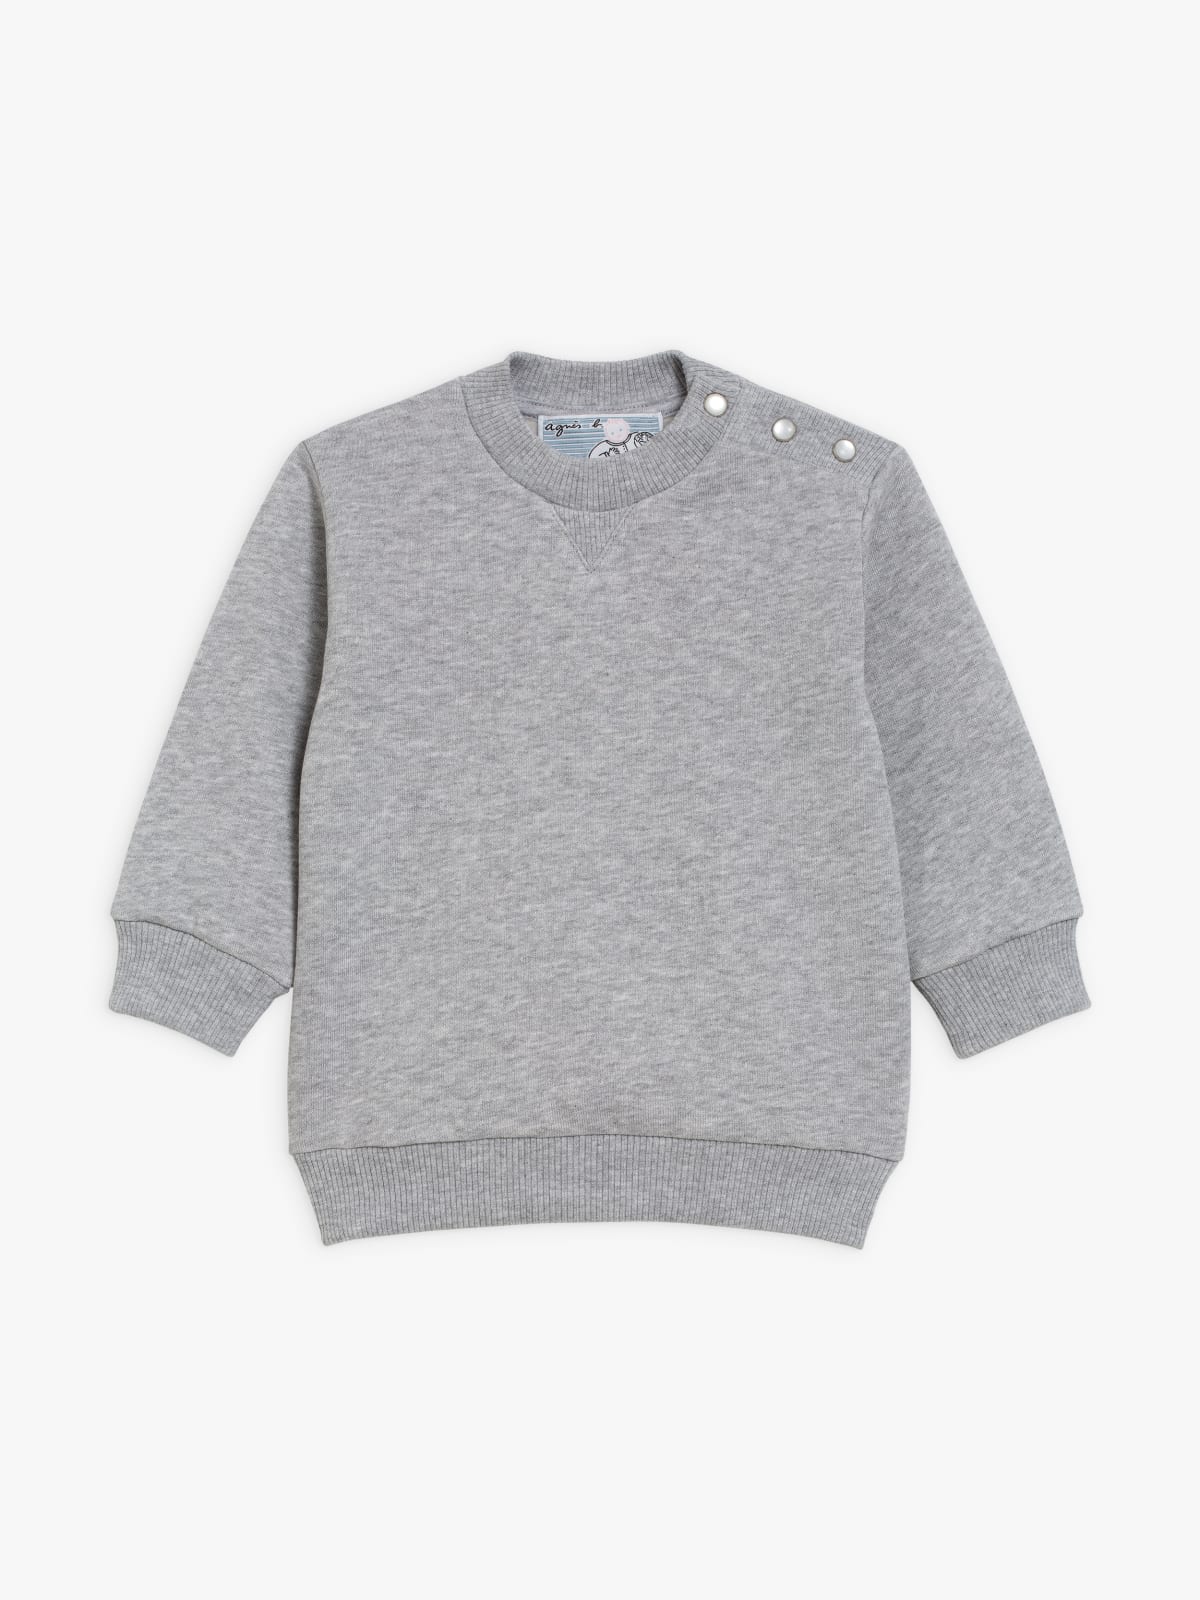 Cup mottled grey fleece sweatshirt with snap buttons